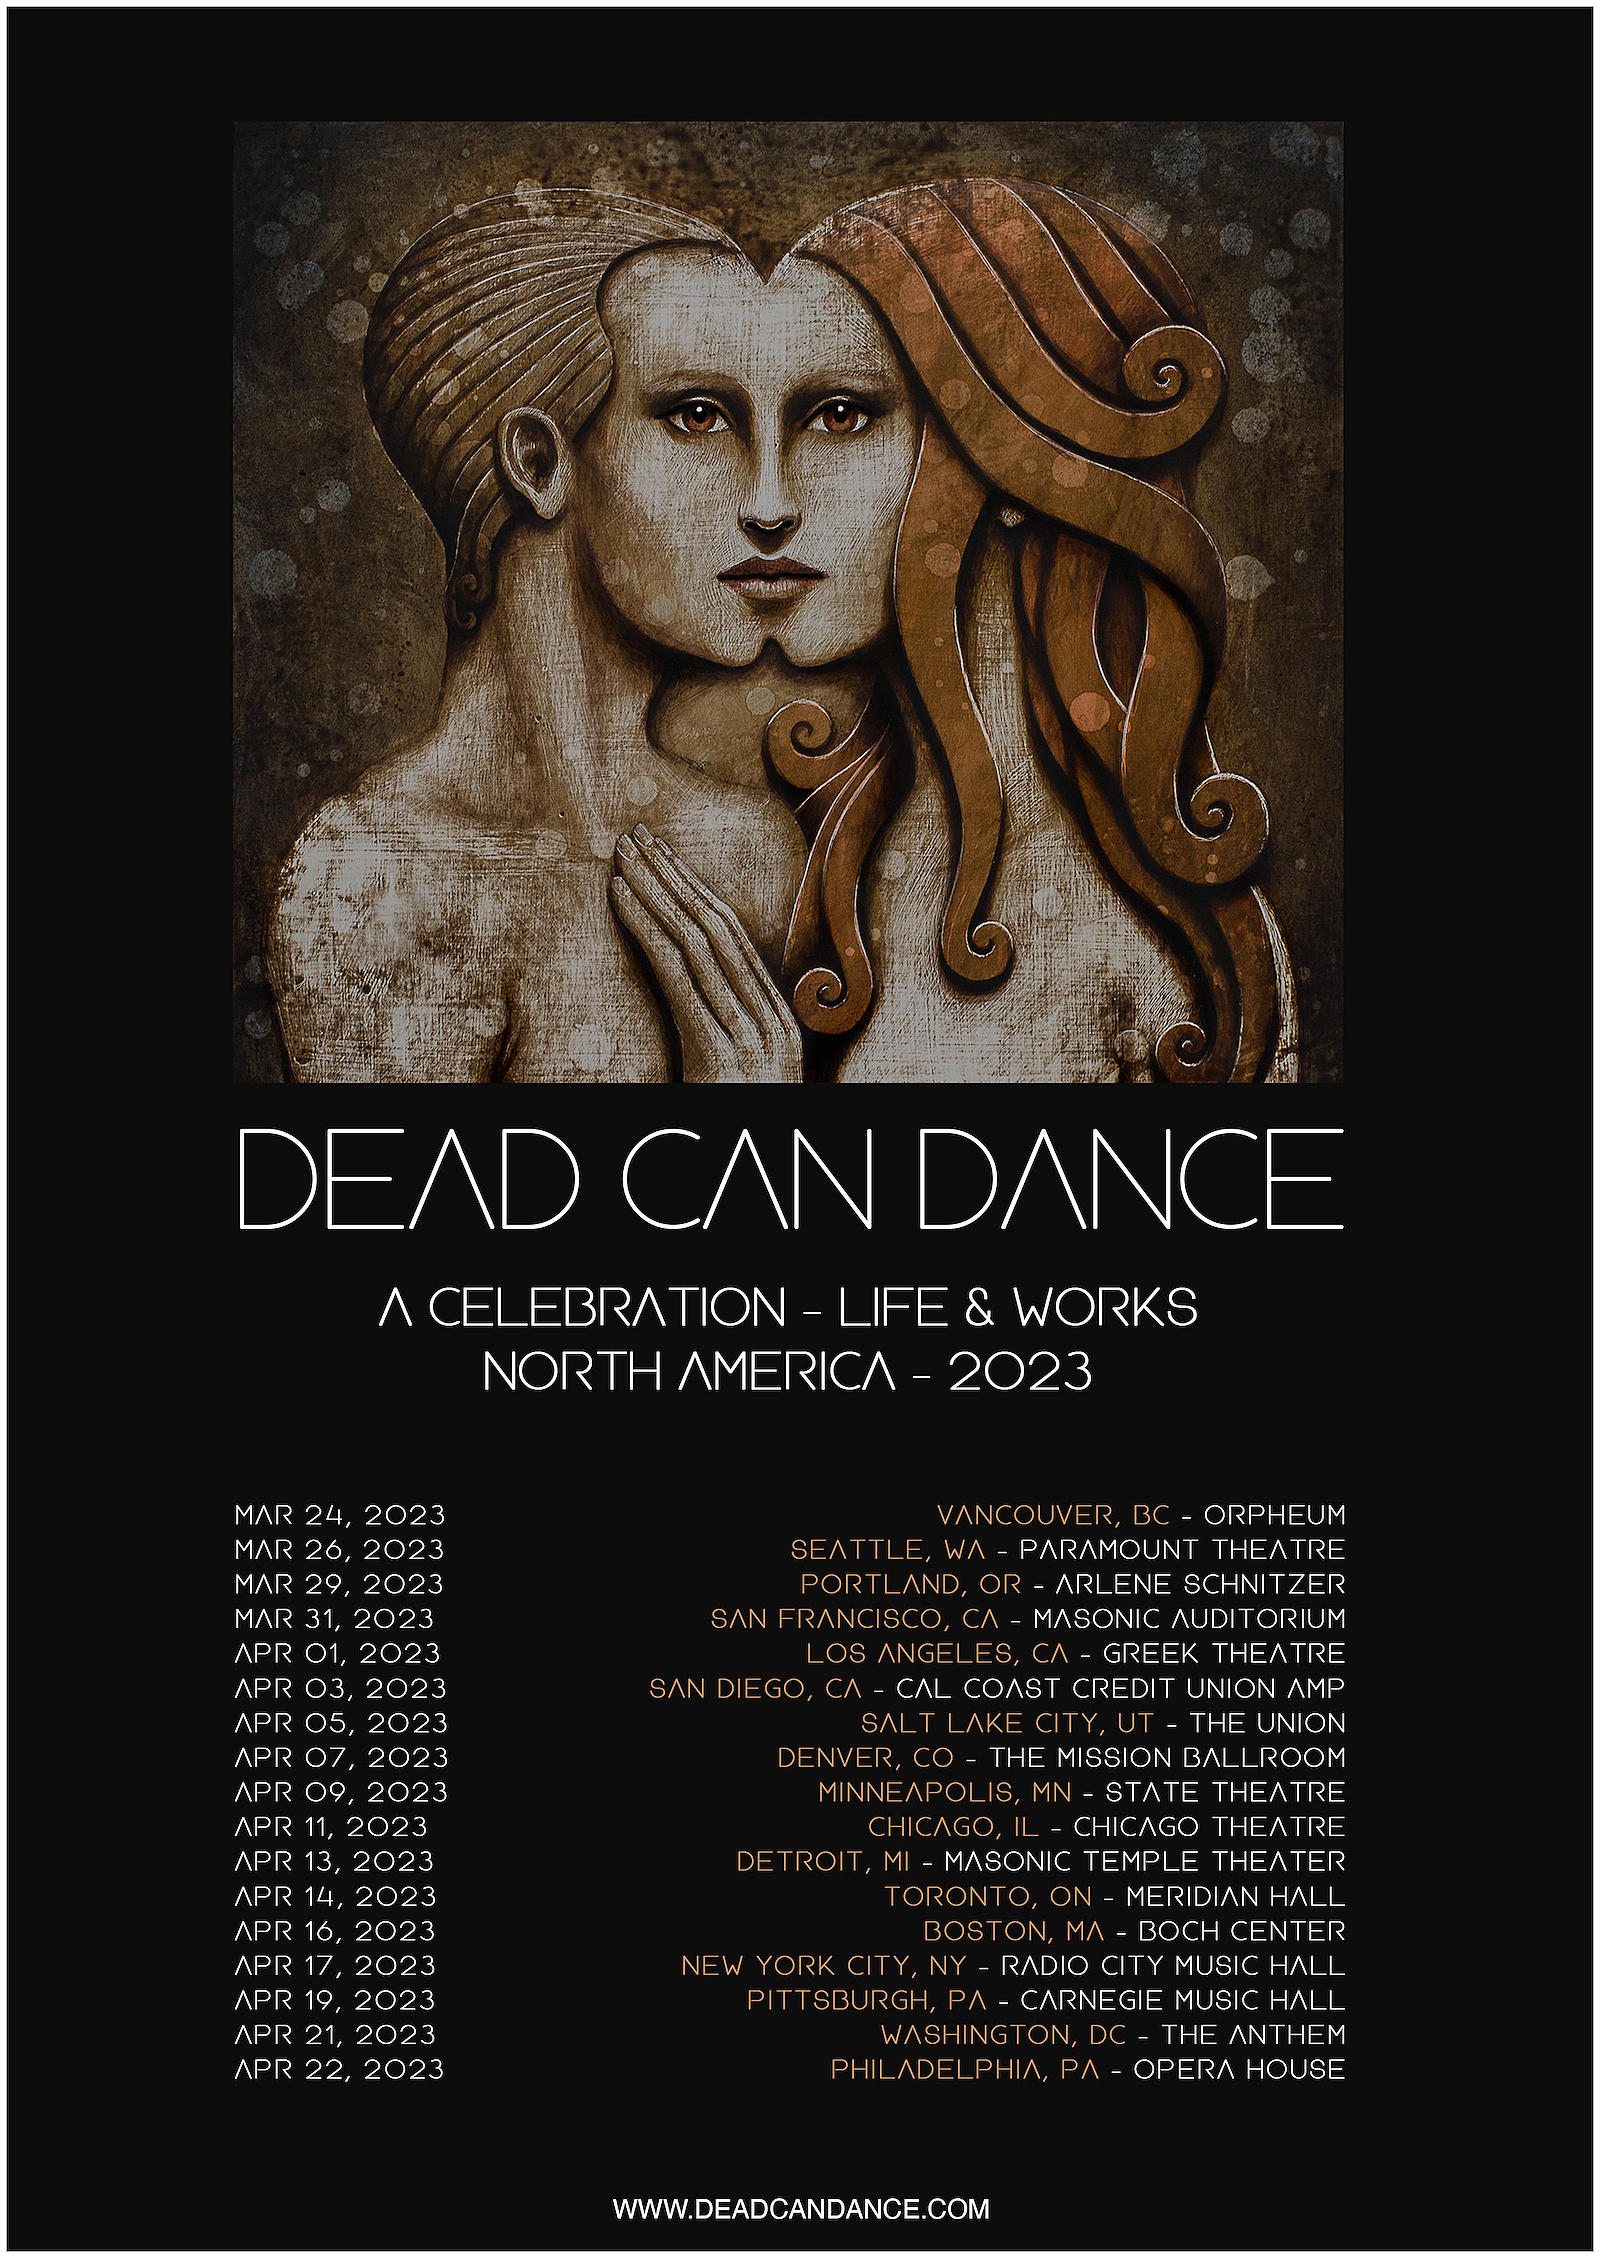 Dead Can Dance A Celebration Life & Works (The Met Philadelphia